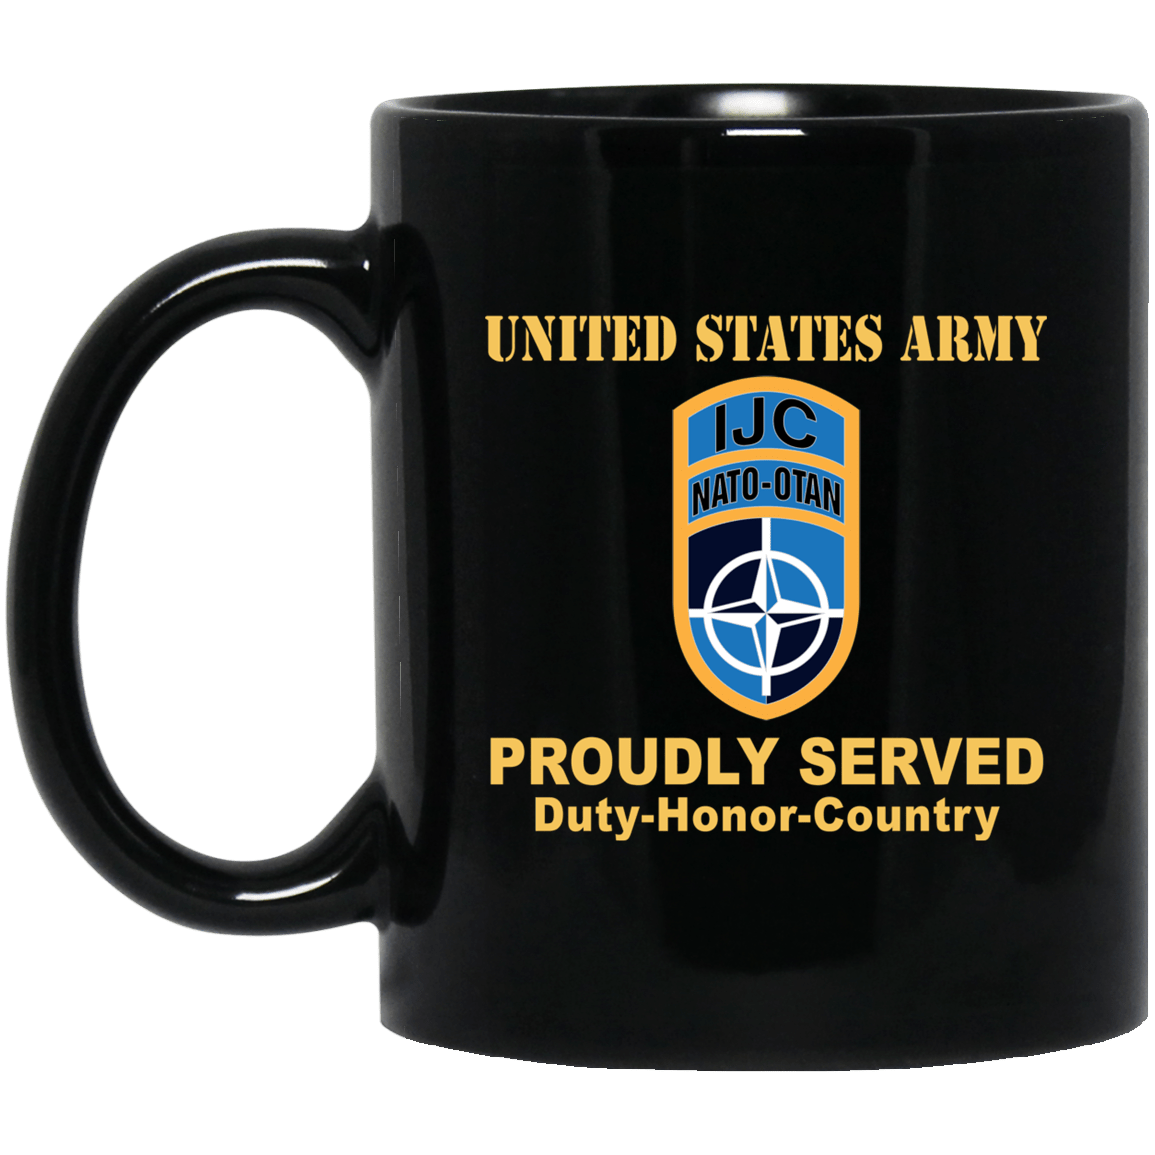 US ARMY CSIB NATO ISAF JOINT COMMAND IN AFGHANISTAN- 11 oz - 15 oz Black Mug-Mug-Army-CSIB-Veterans Nation